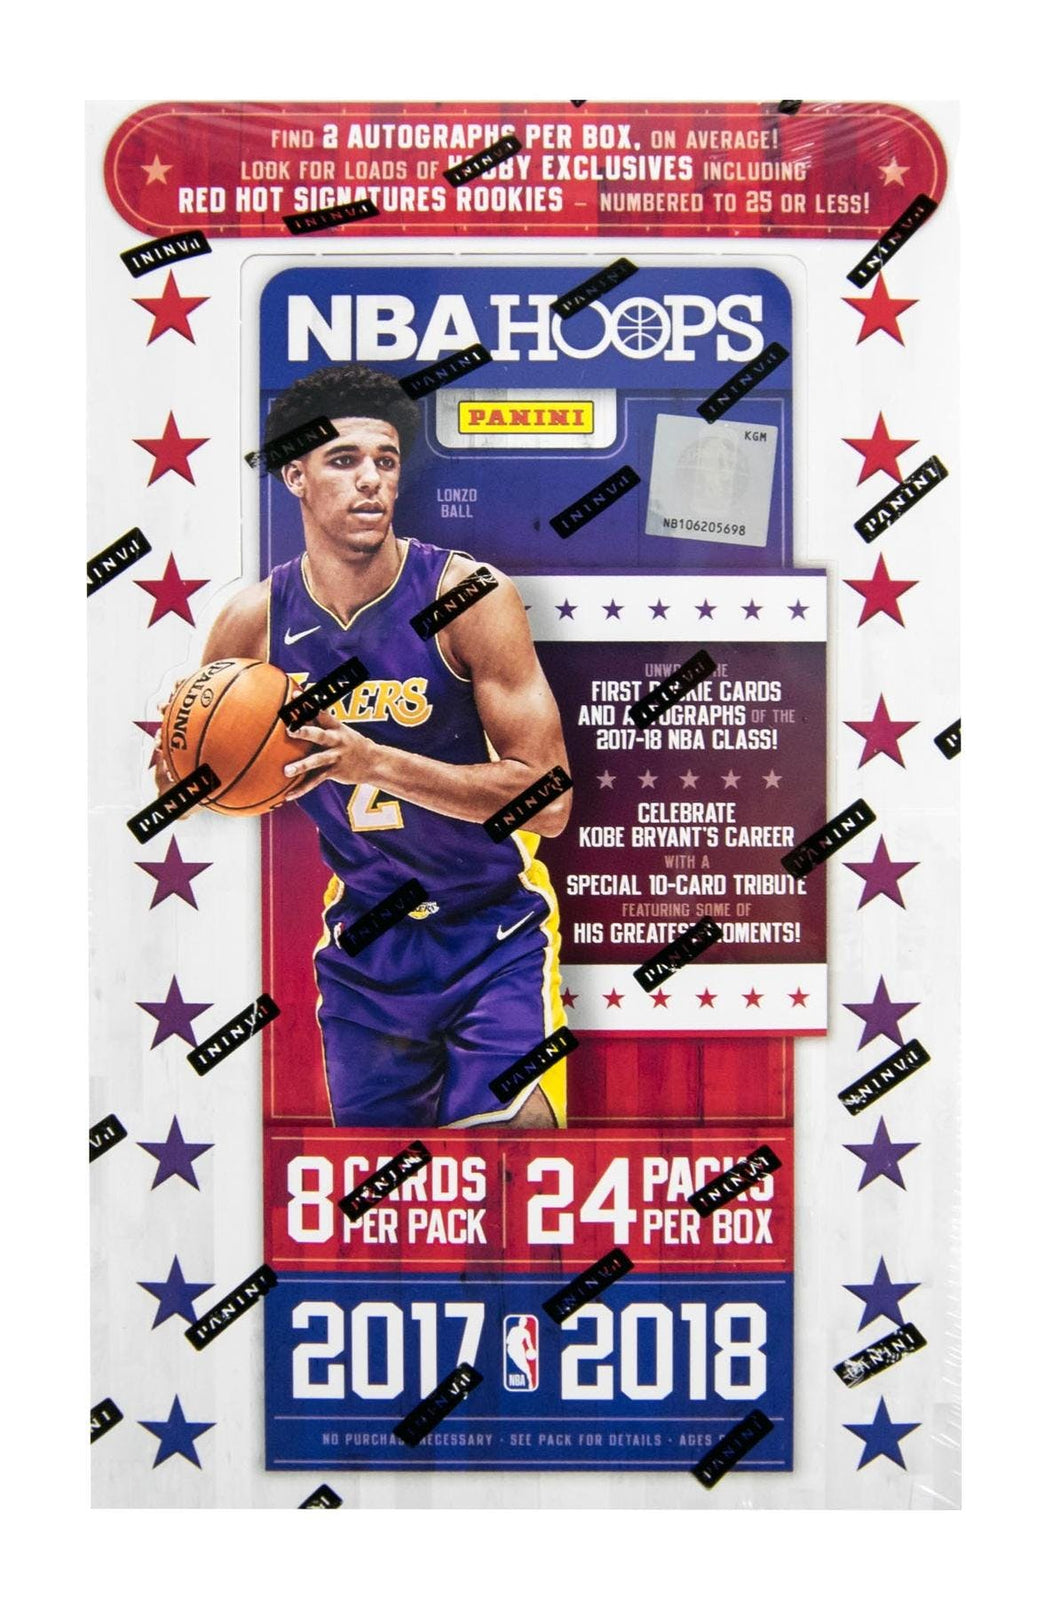 2017/18 Panini Hoops Basketball Hobby Box (Releases 10/25/17) - Free Supplies!